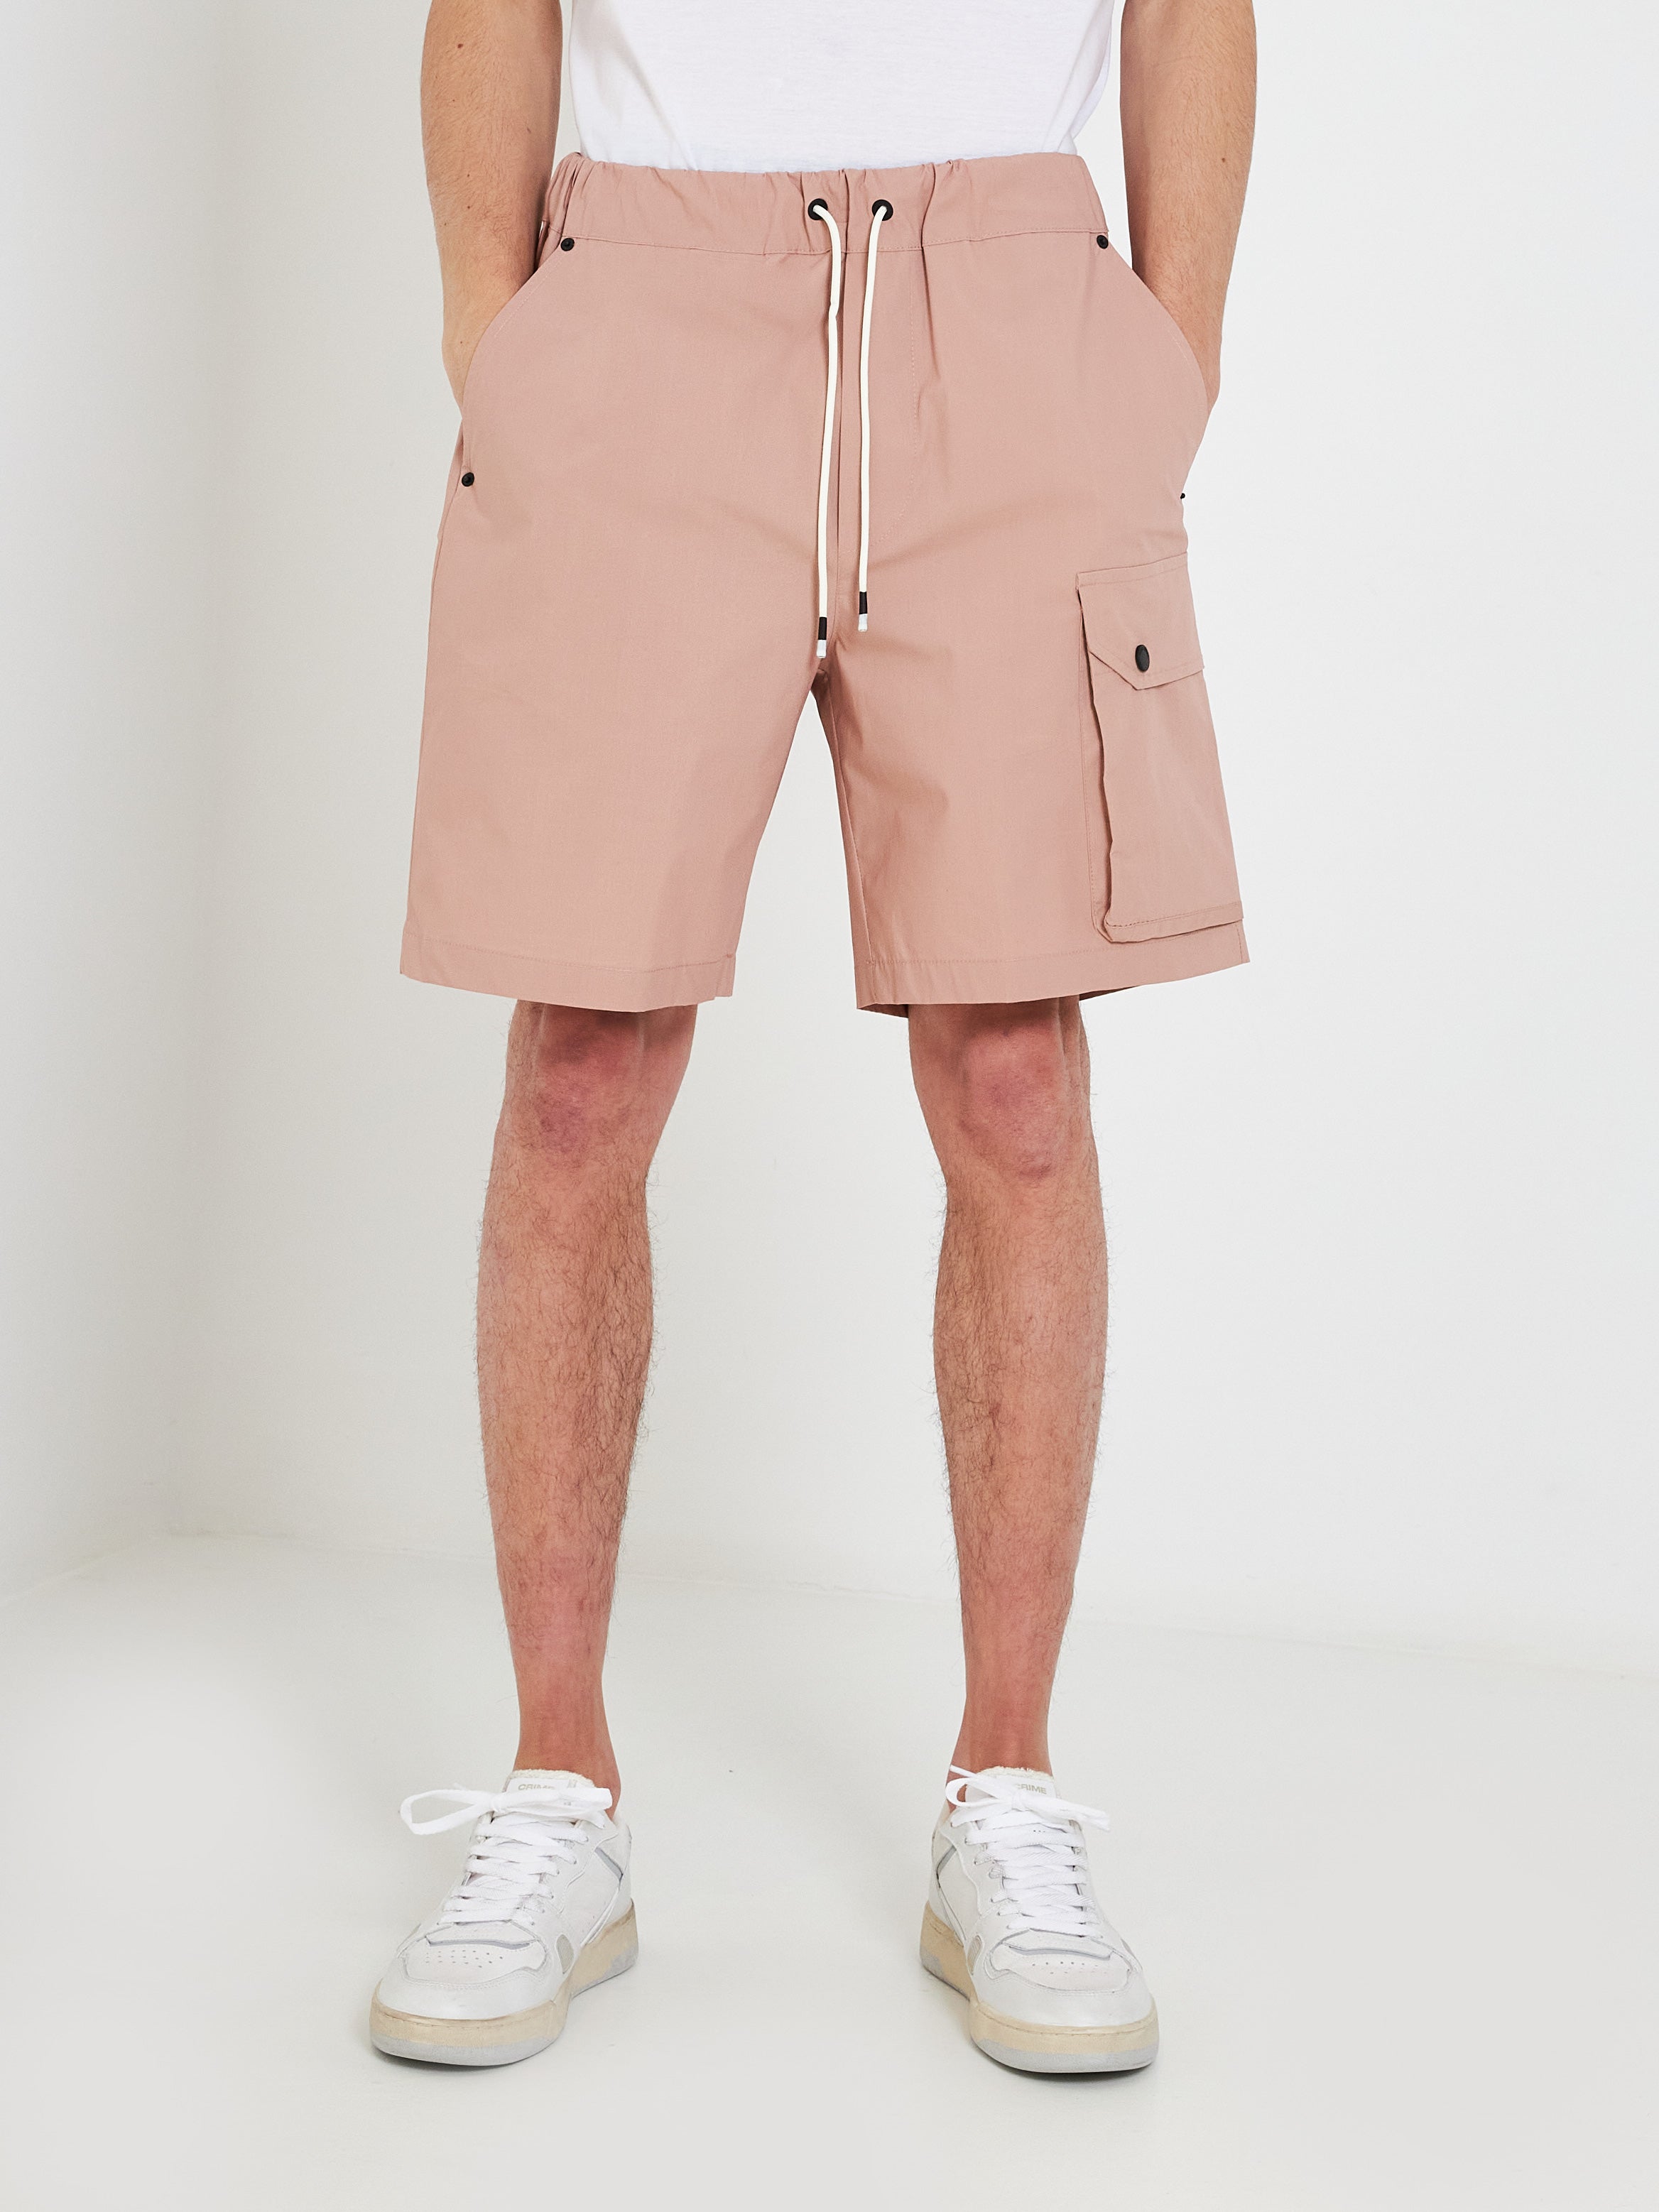 White Over pink Bermuda shorts